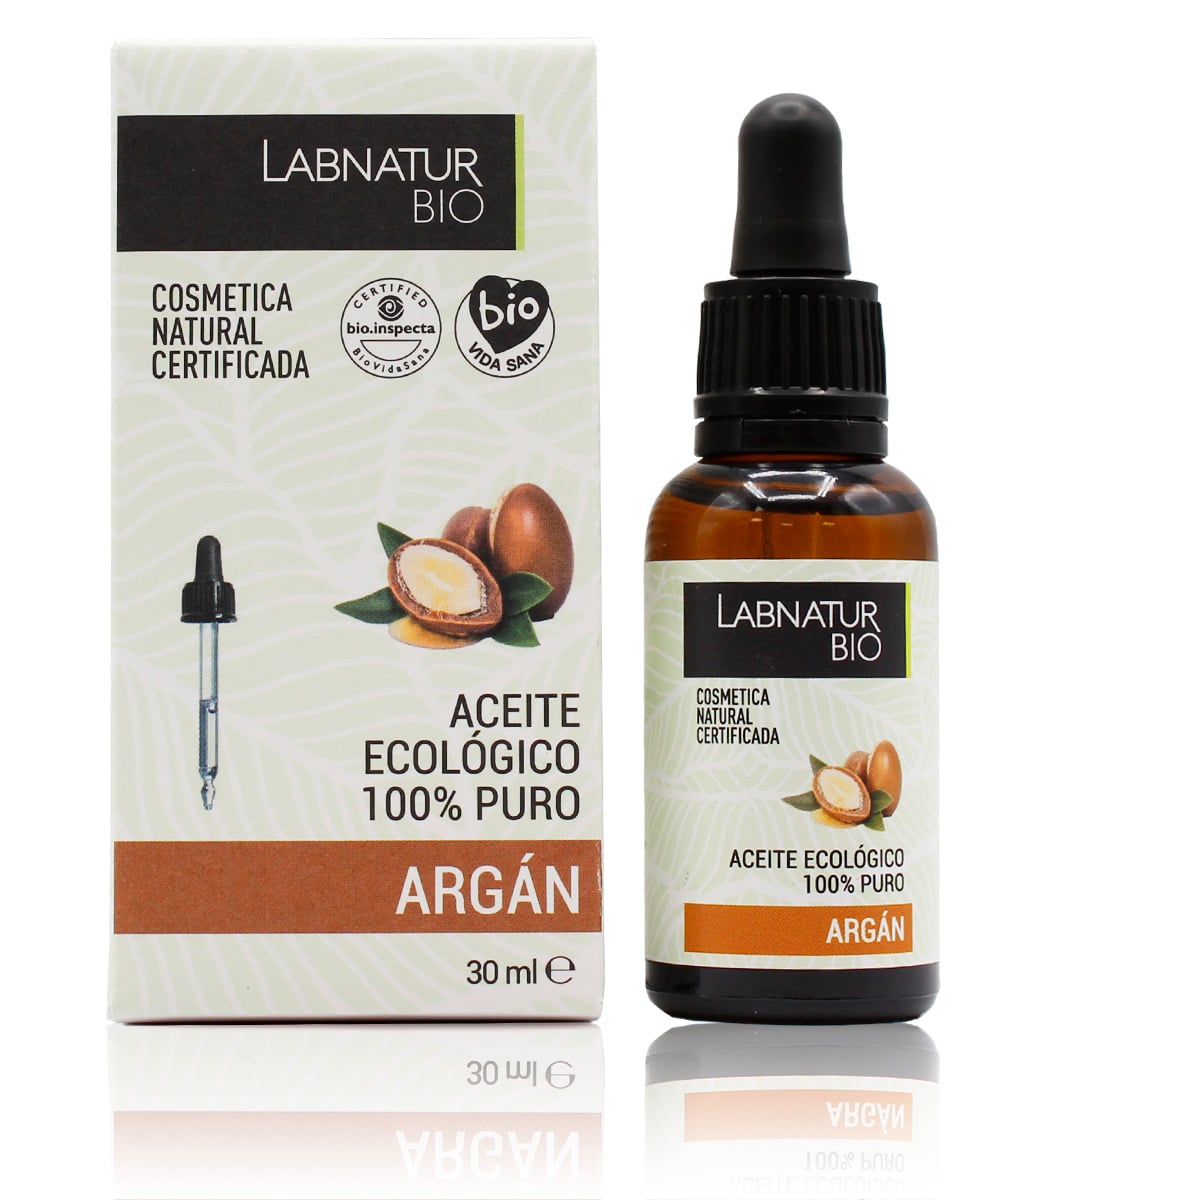 Buy Argan Oil 30ml Labnatur Bio